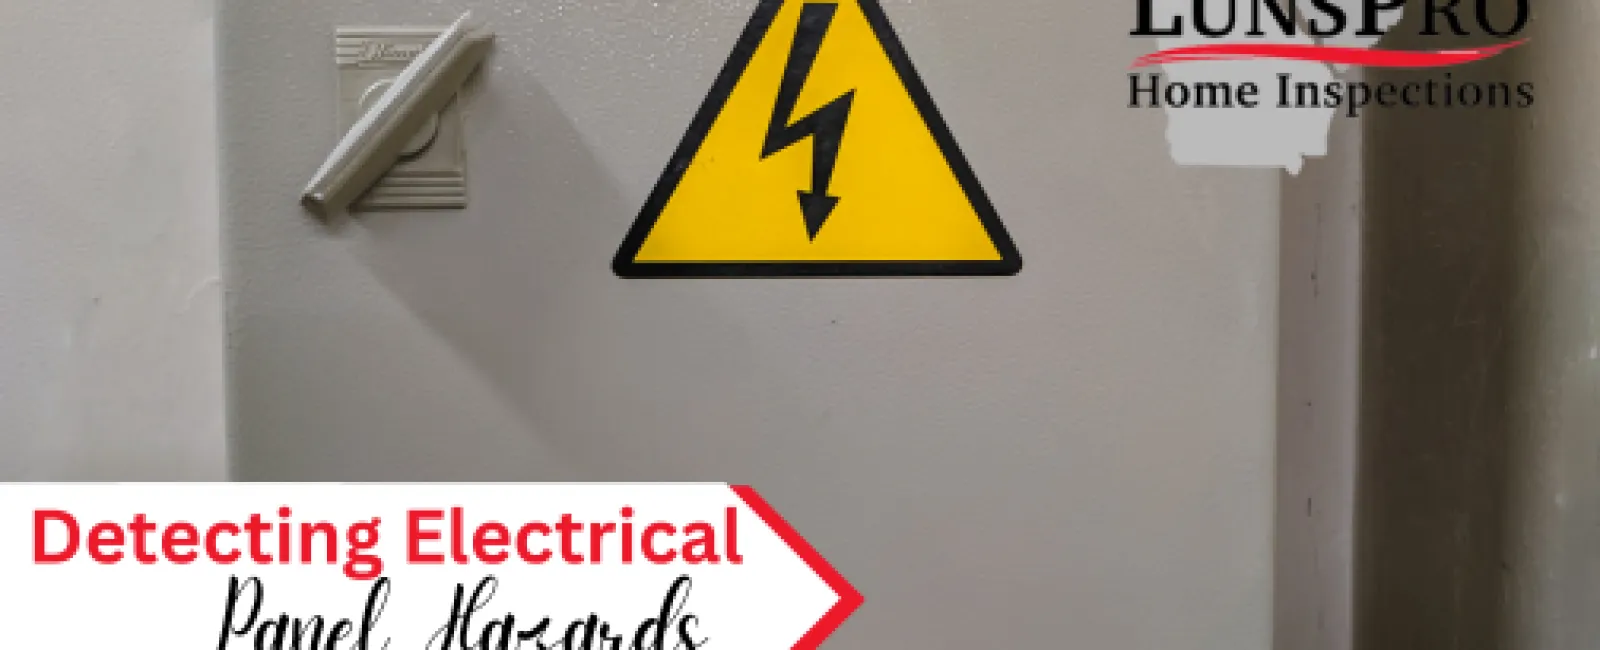 Detecting Electrical Panel Hazards